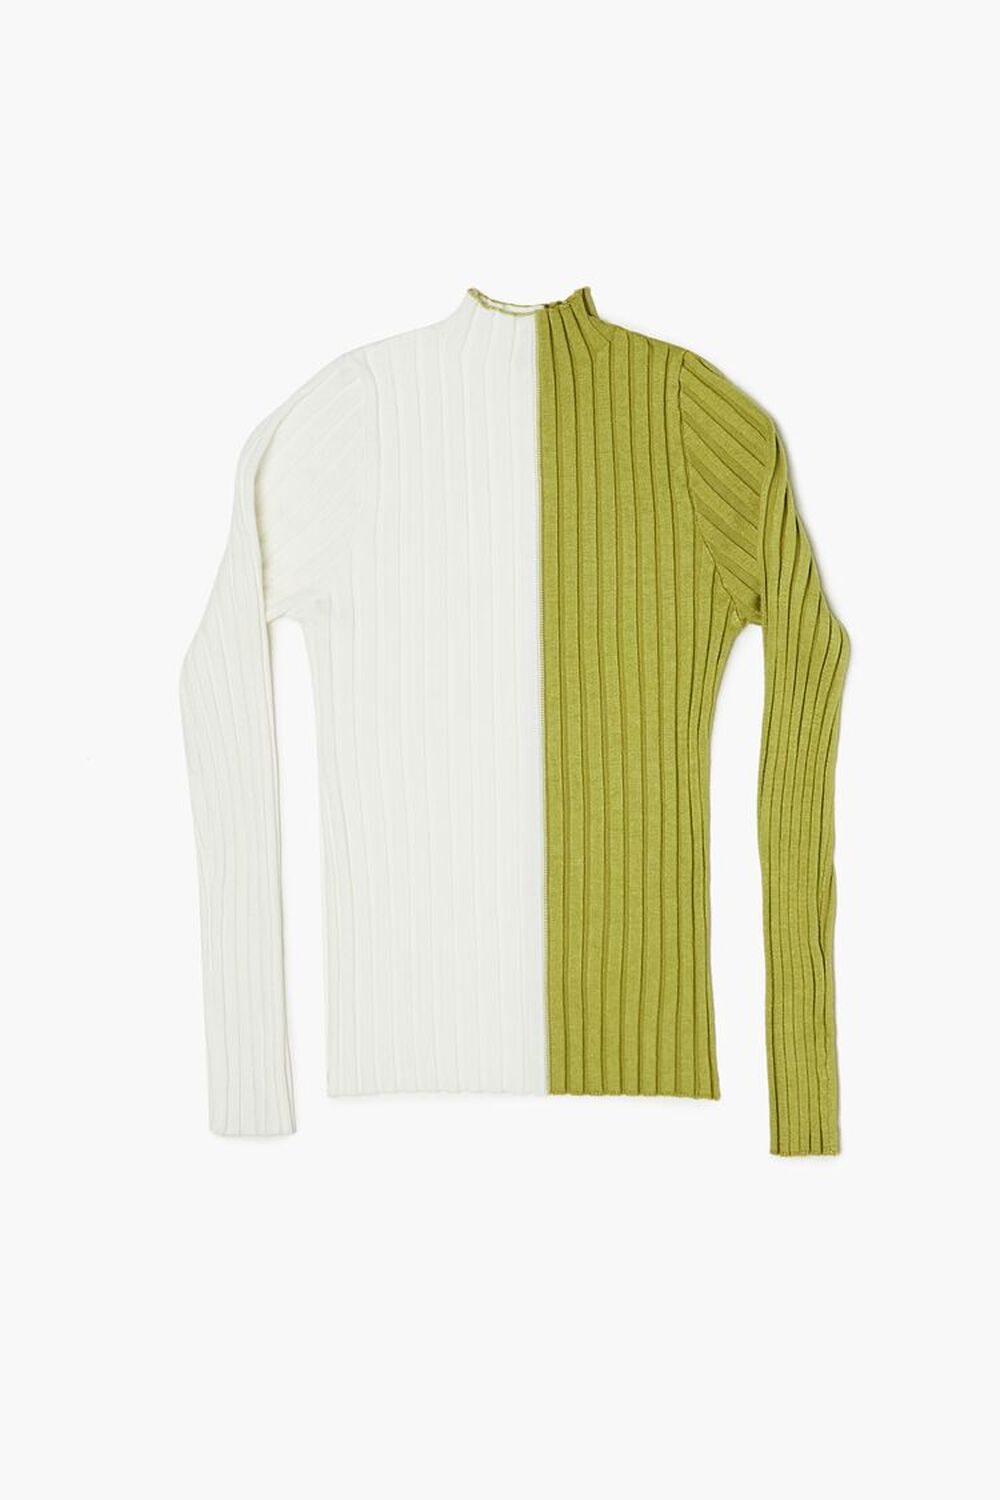 CREAM/HERBAL GREEN Girls Colorblock Sweater (Kids), image 1